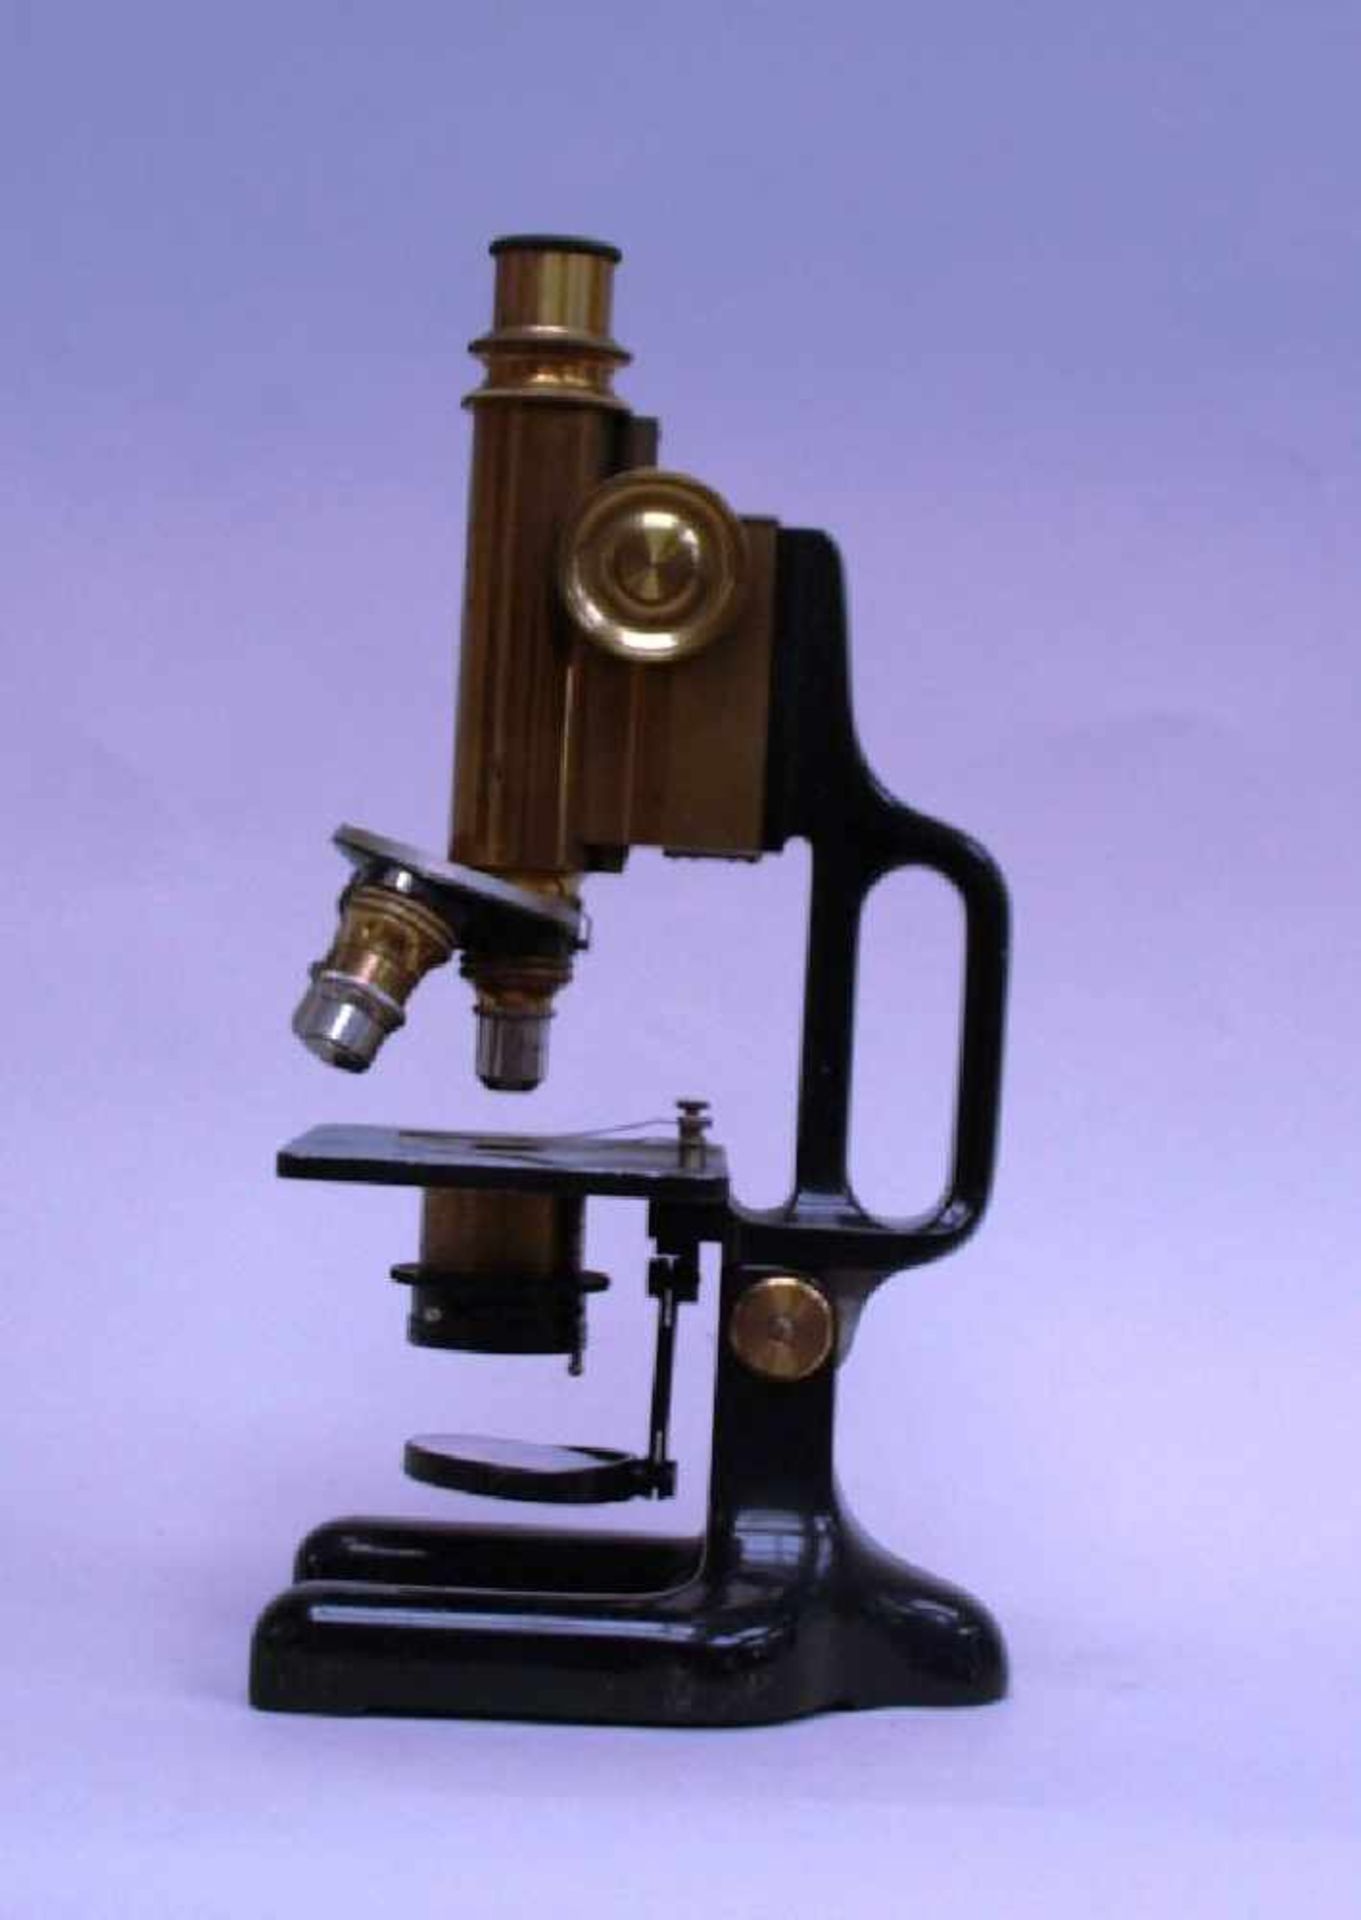 Mikroskop - signiert "Busch, Rathenau", Messing, 3 Okulare, Anfang 20. Jahrhundert, Höhe: ca.30 cm,